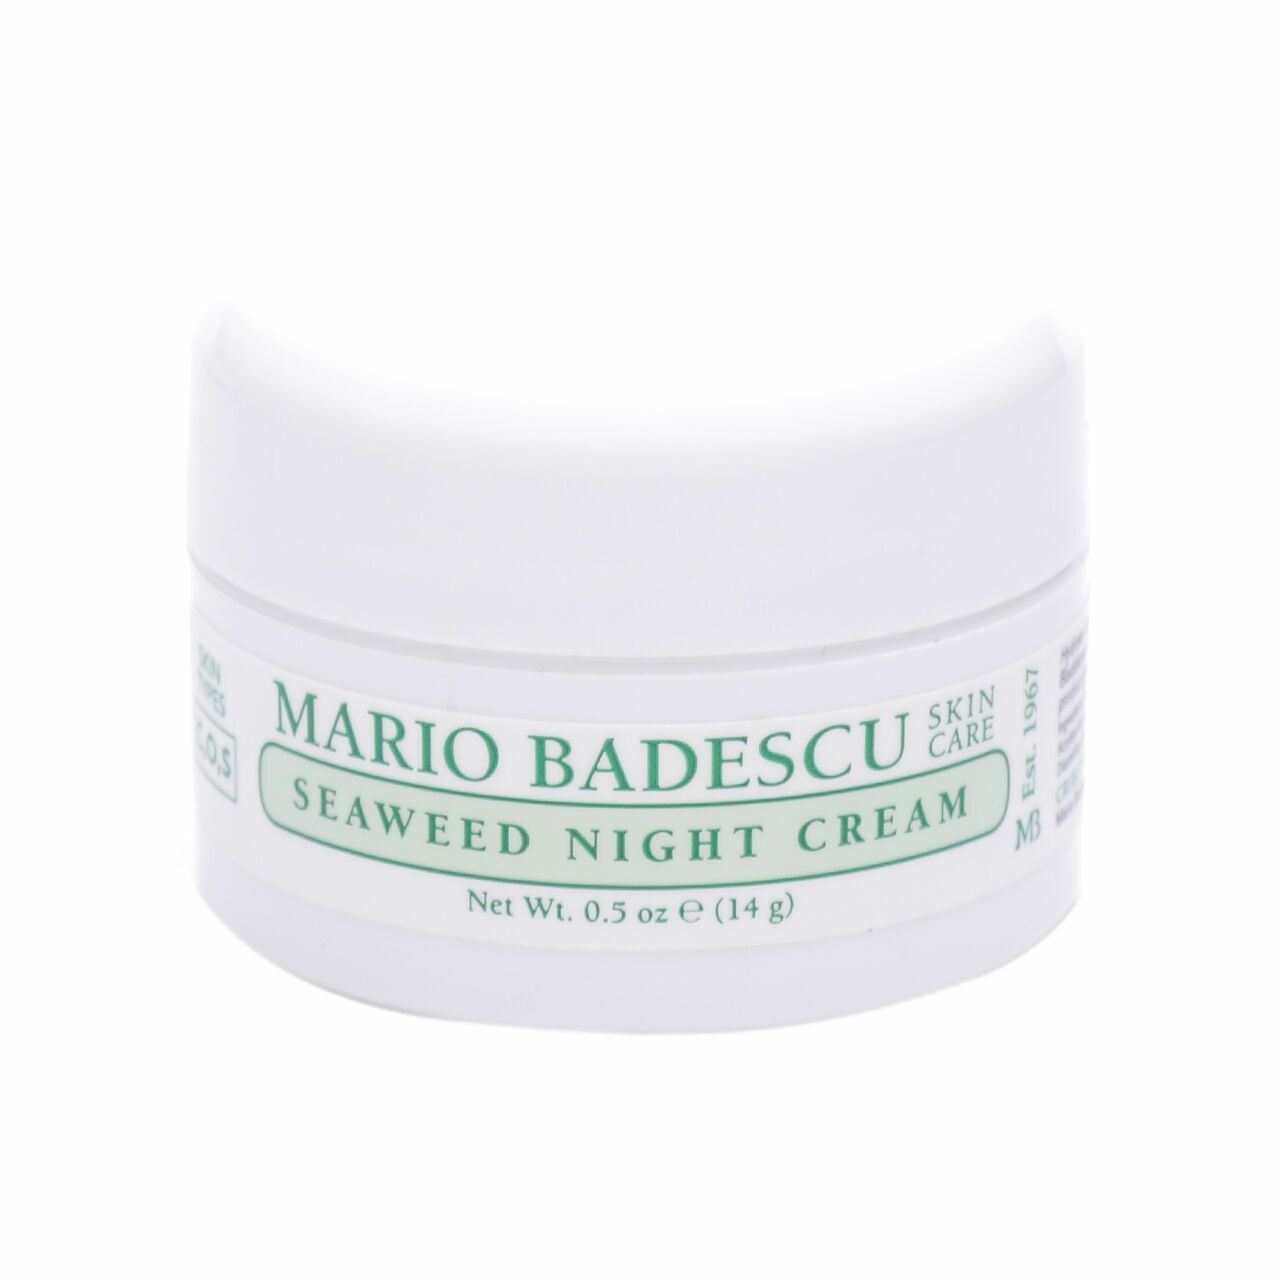 Mario Badescu Seaweed Night Cream Skin Care